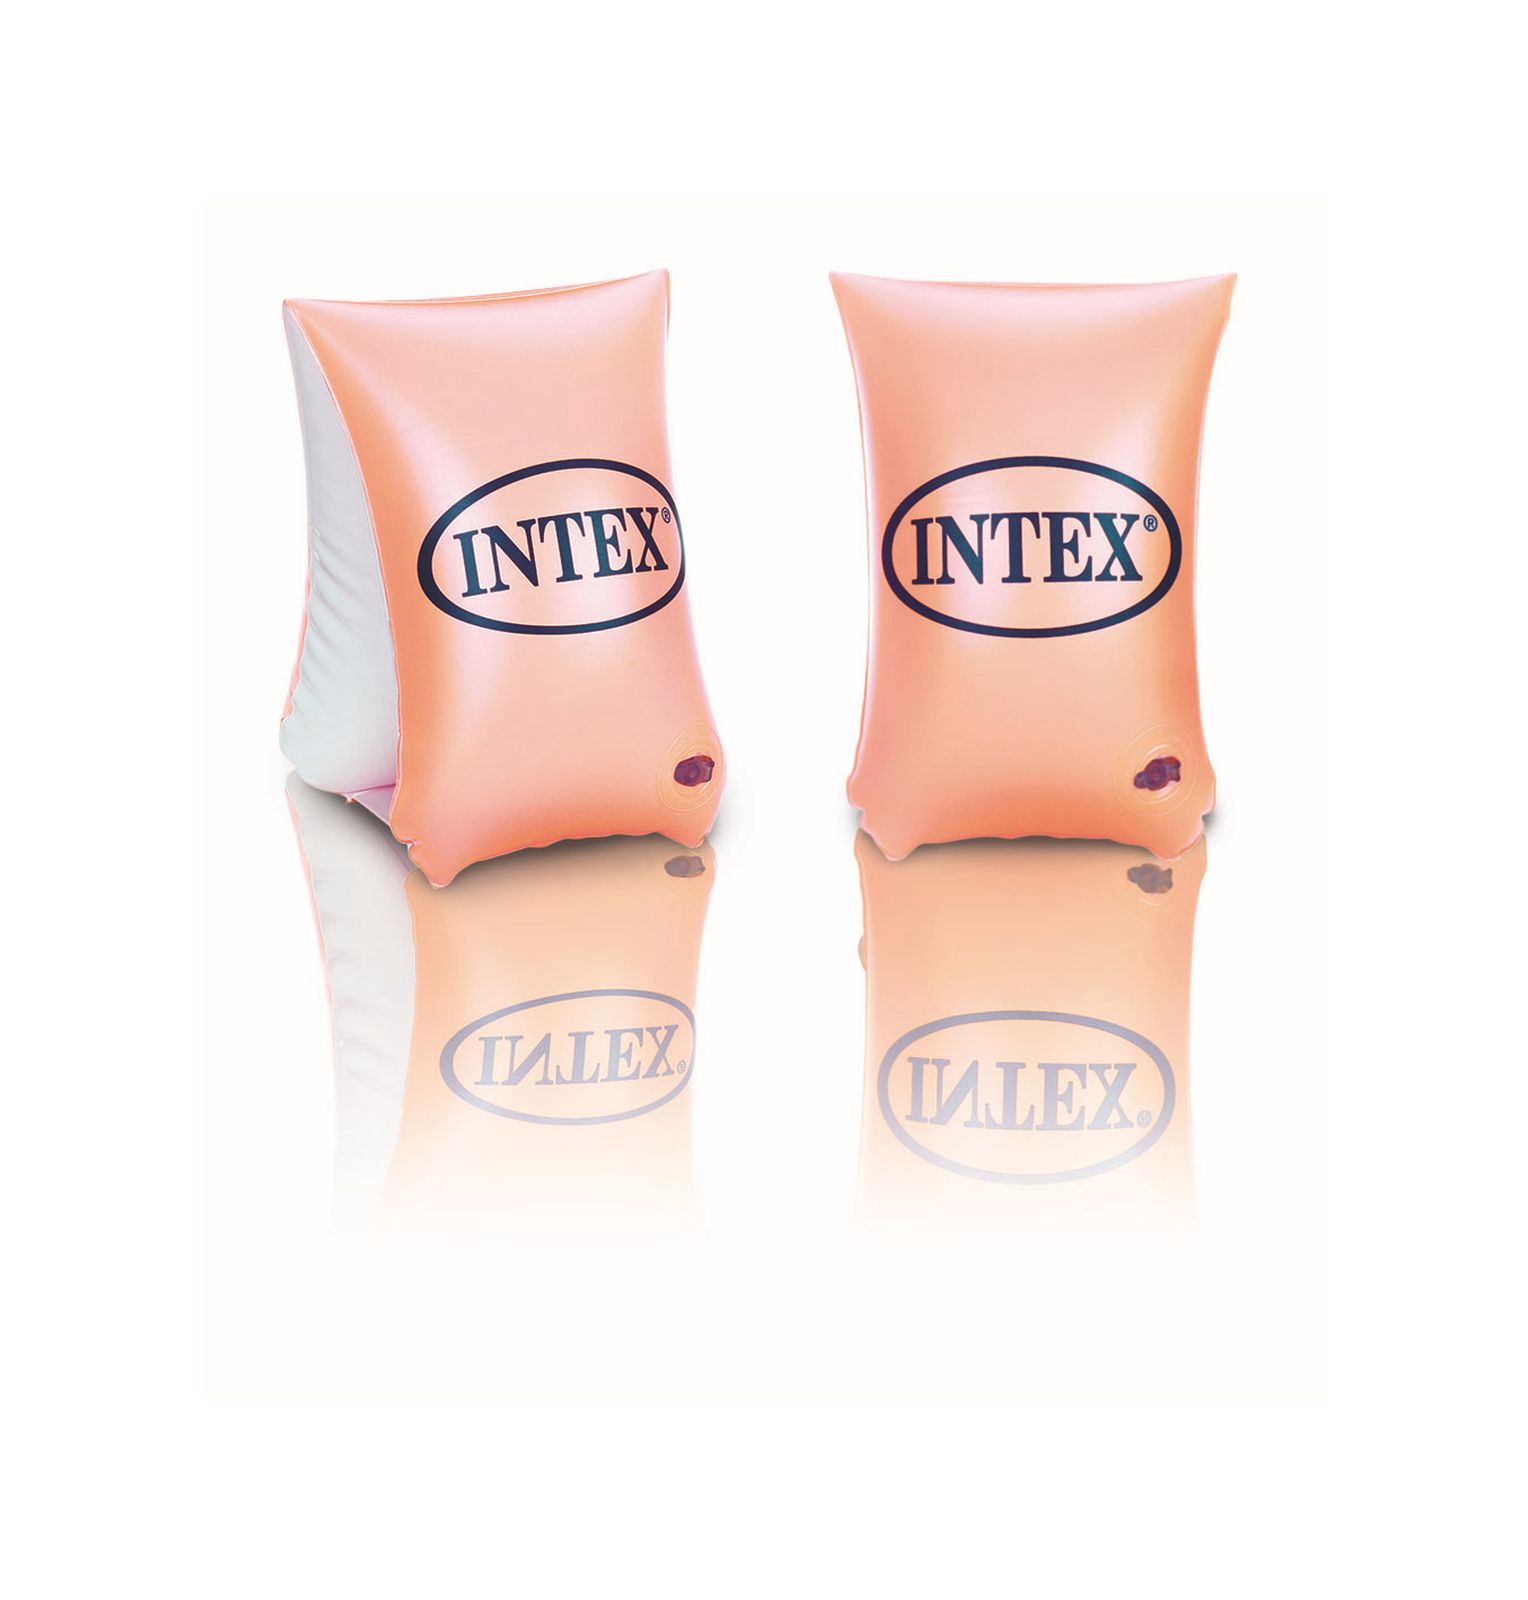 Intex braccioli deluxe cm 30x15 - INTEX